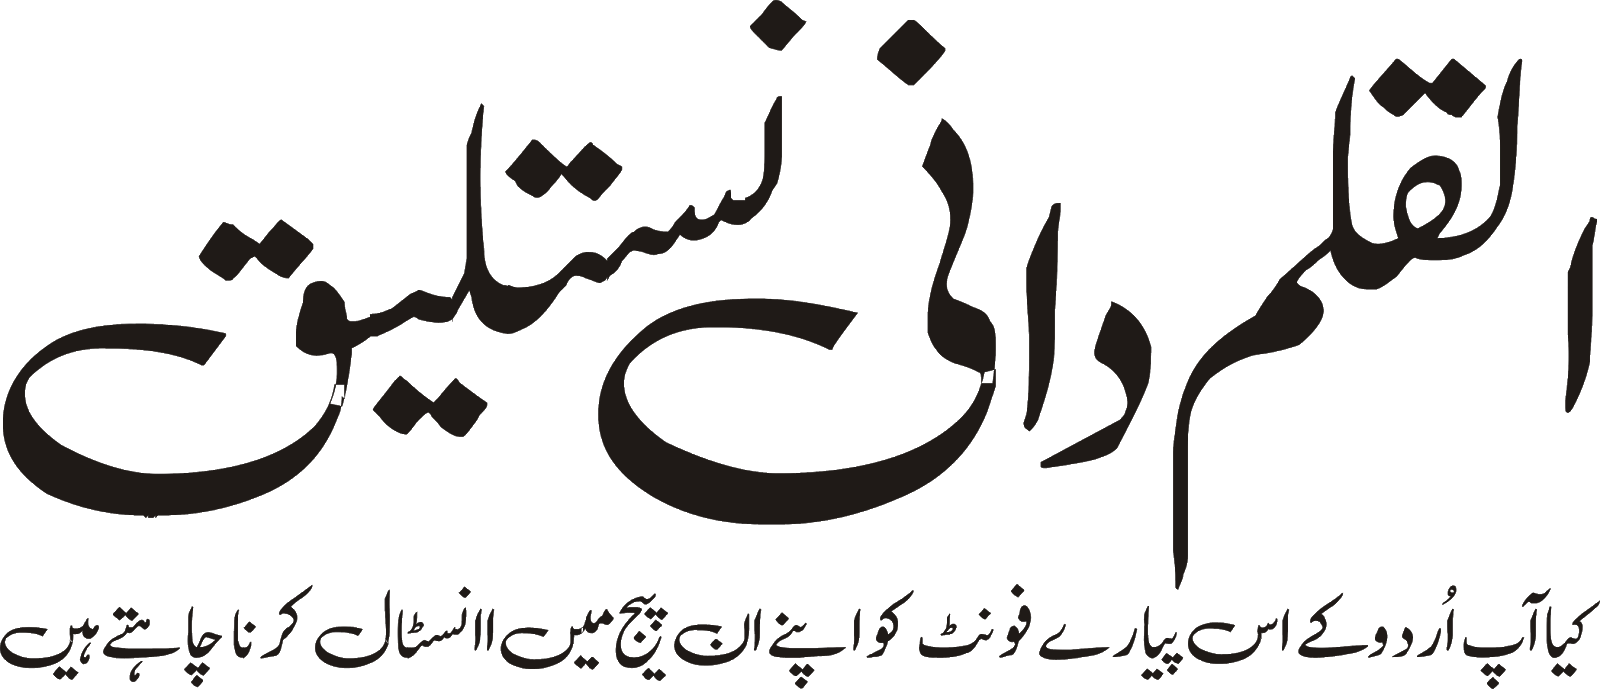 nastaleeq urdu fonts